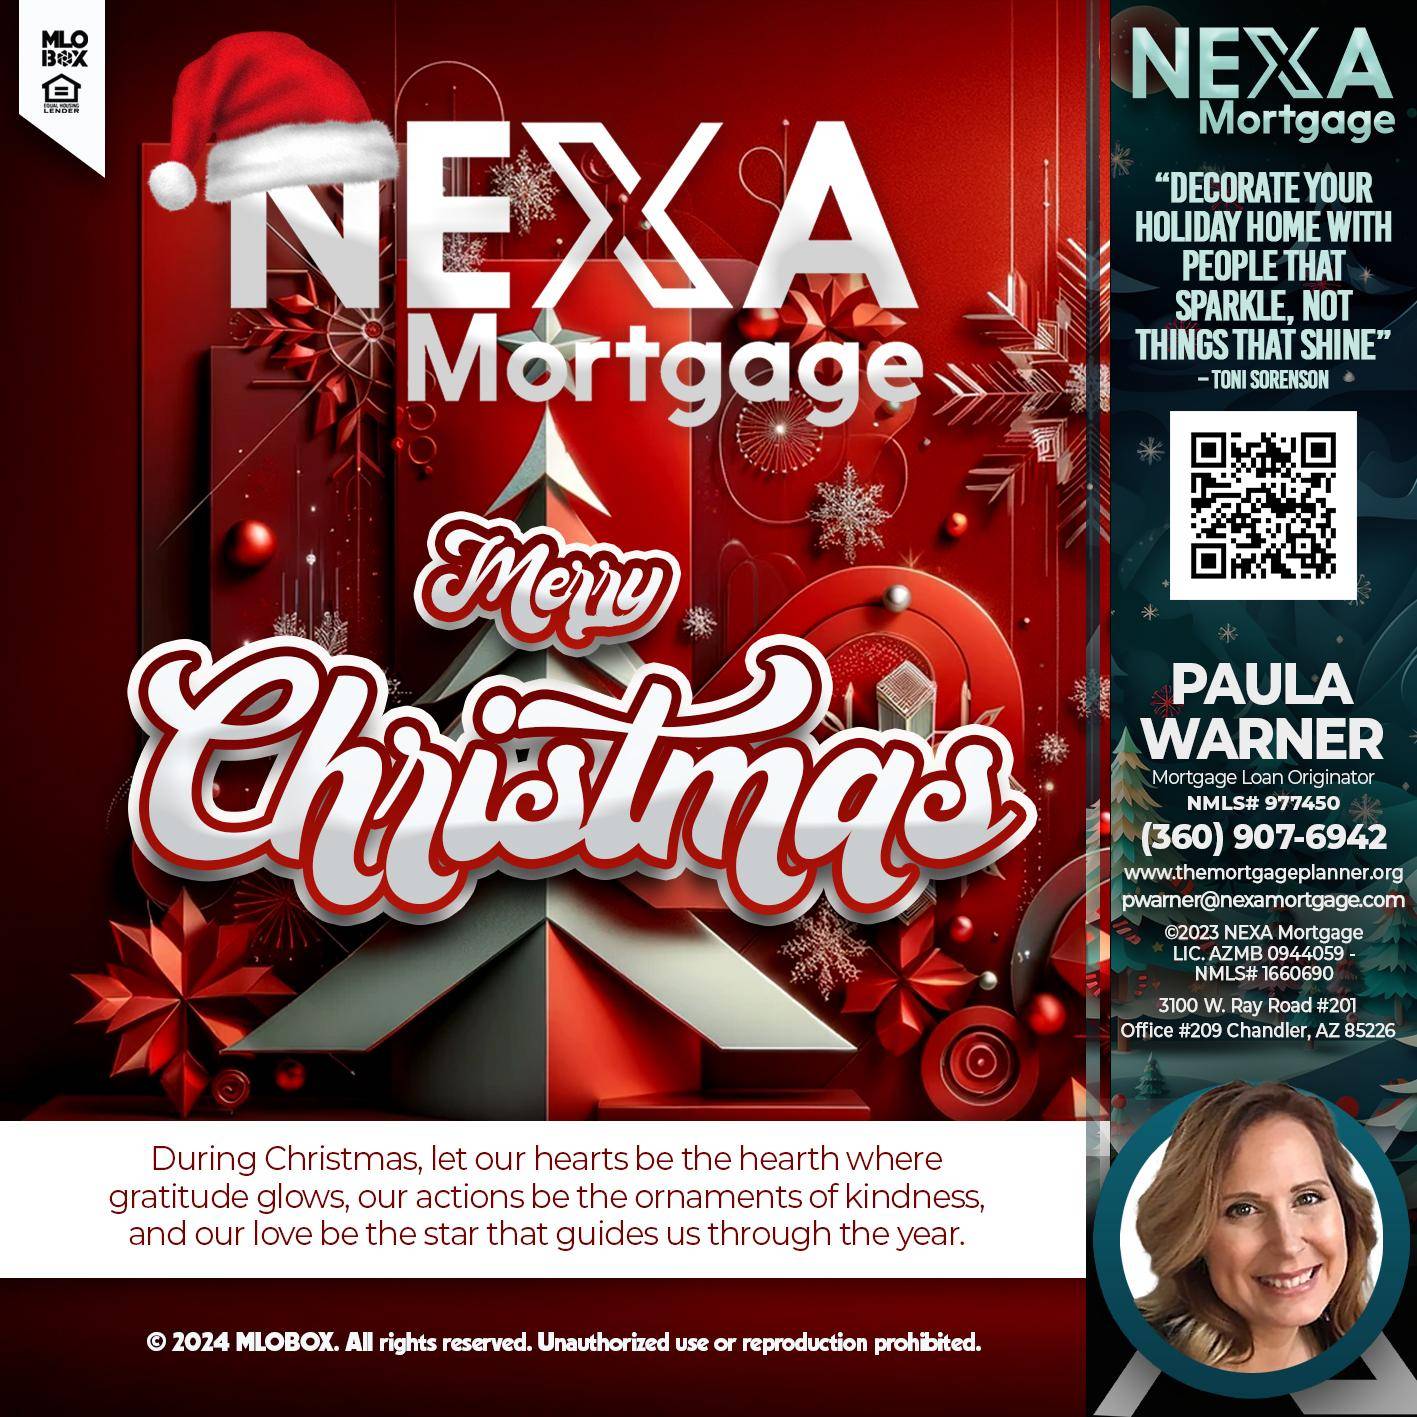 MERRY CHRISTMAS - Paula Warner -Mortgage Loan Originator